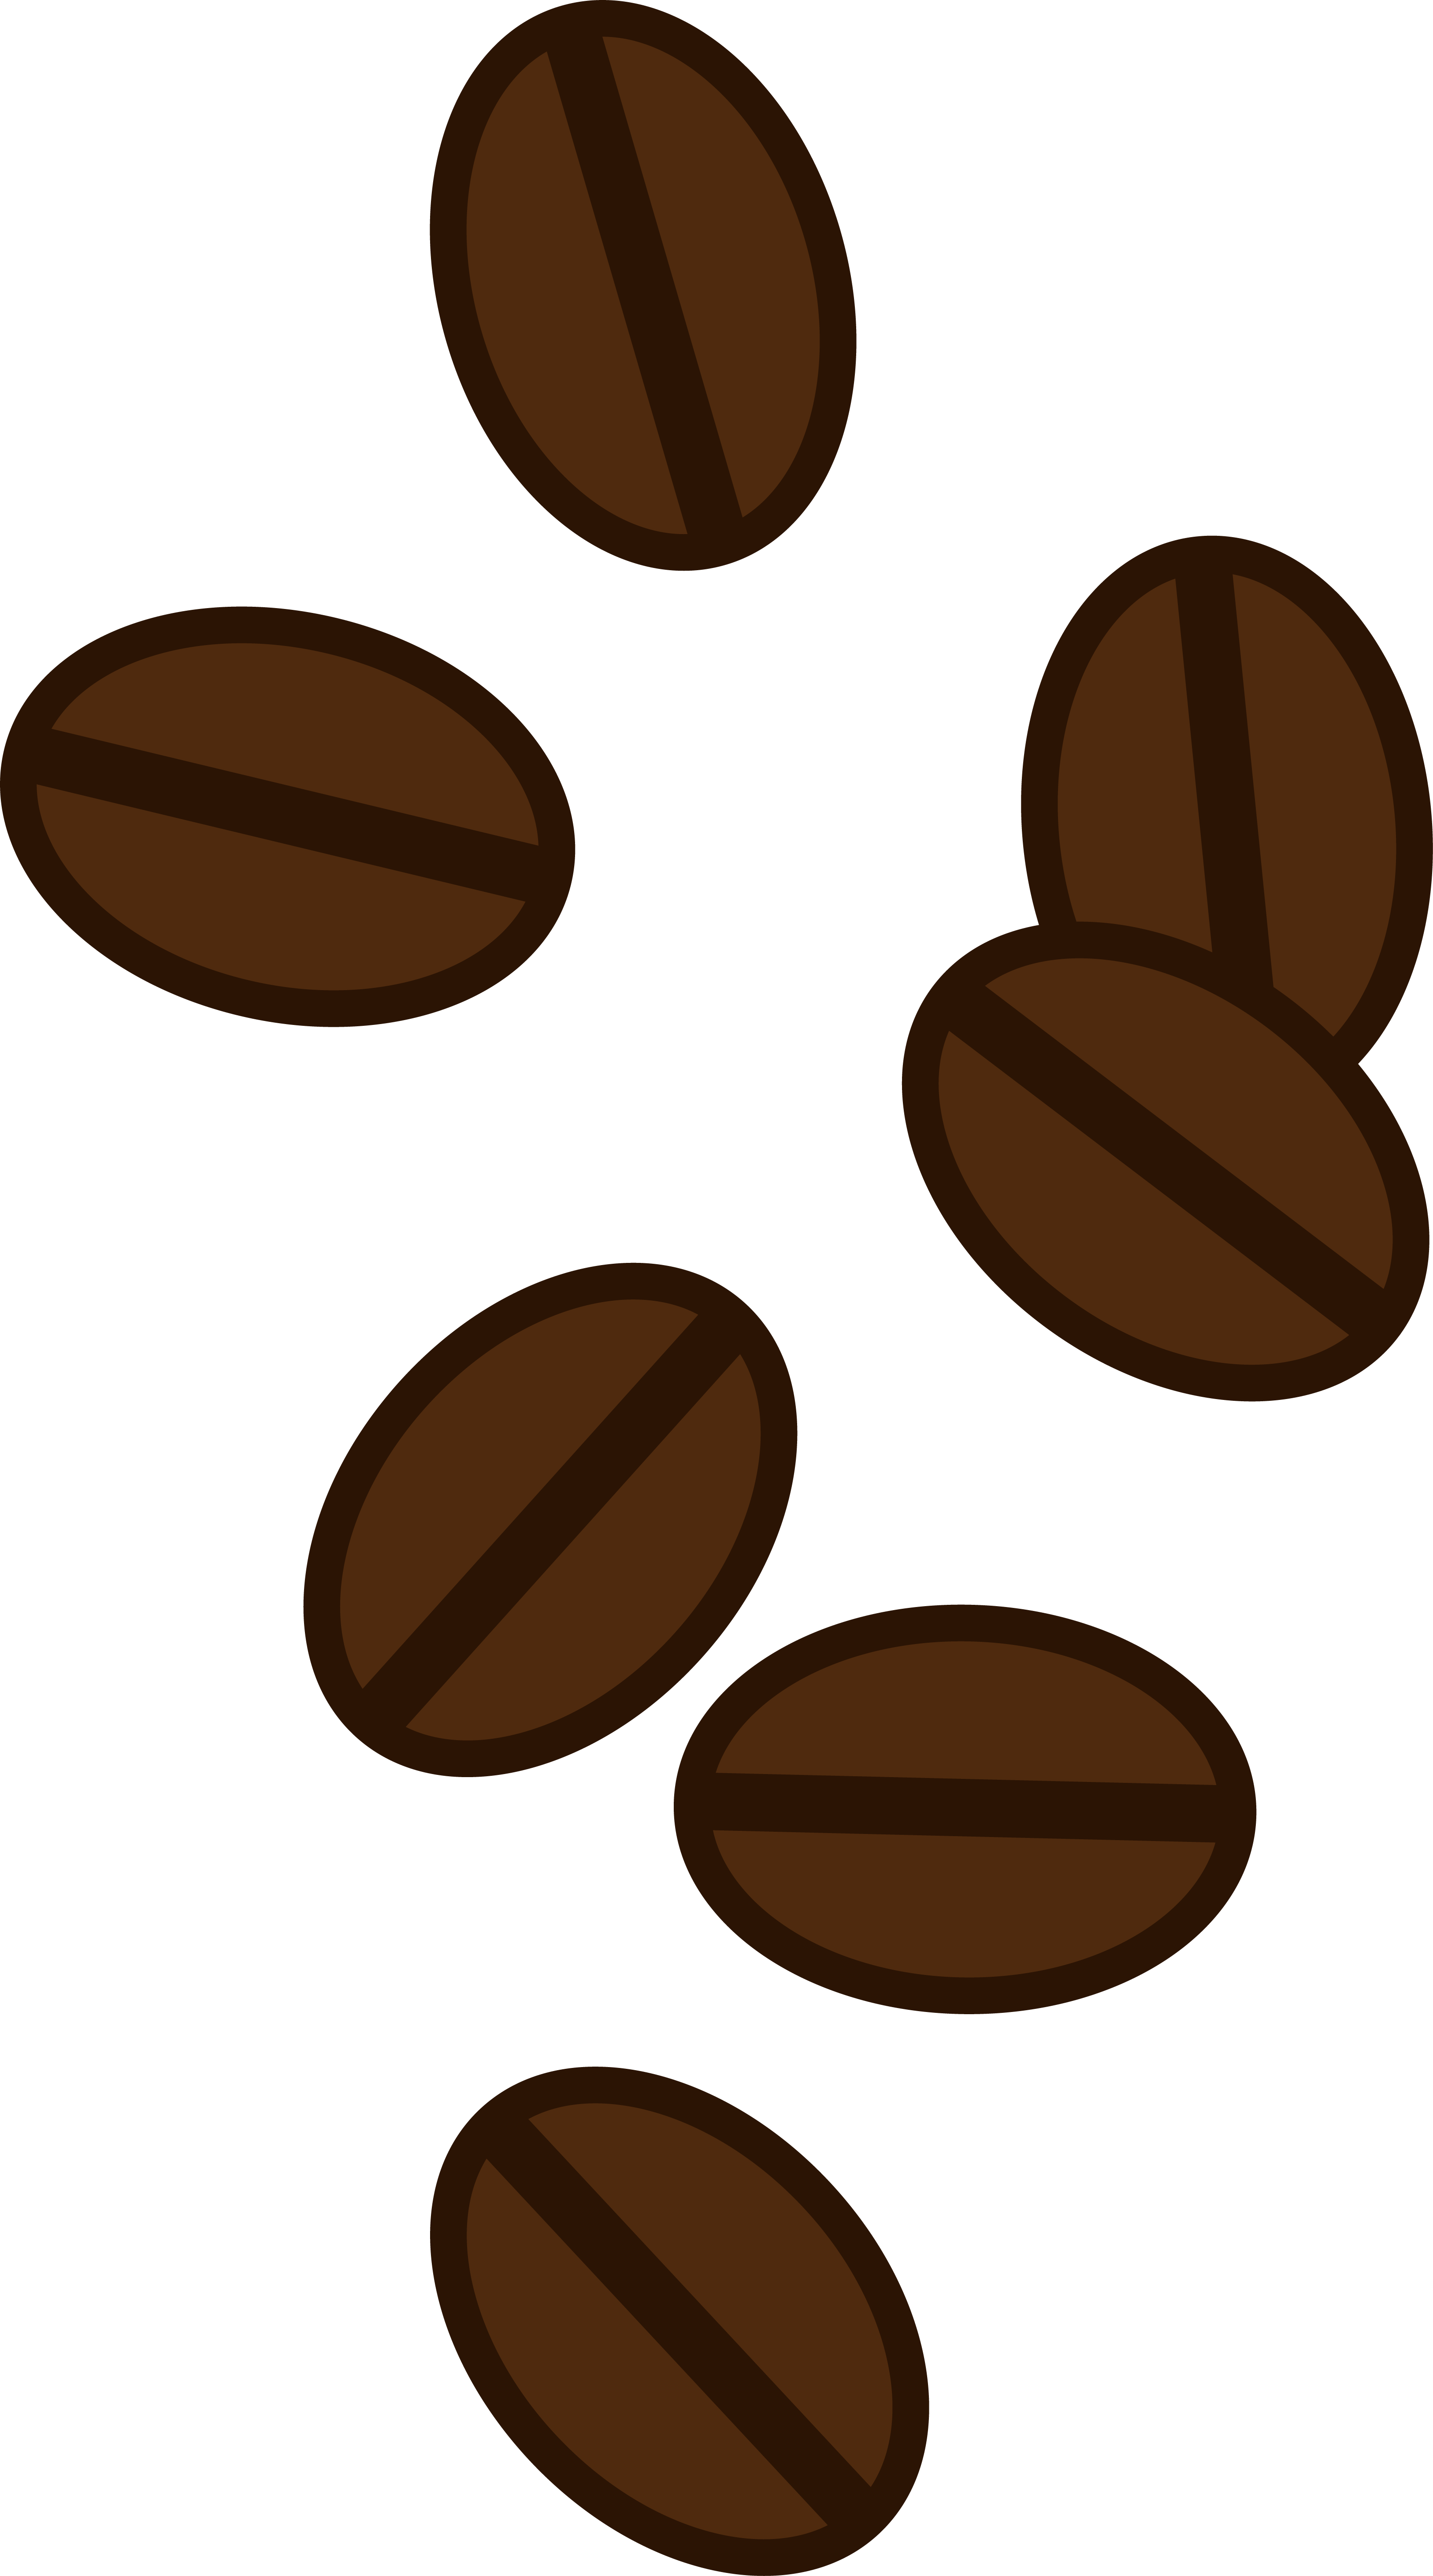 Coffee Beans Clipart.